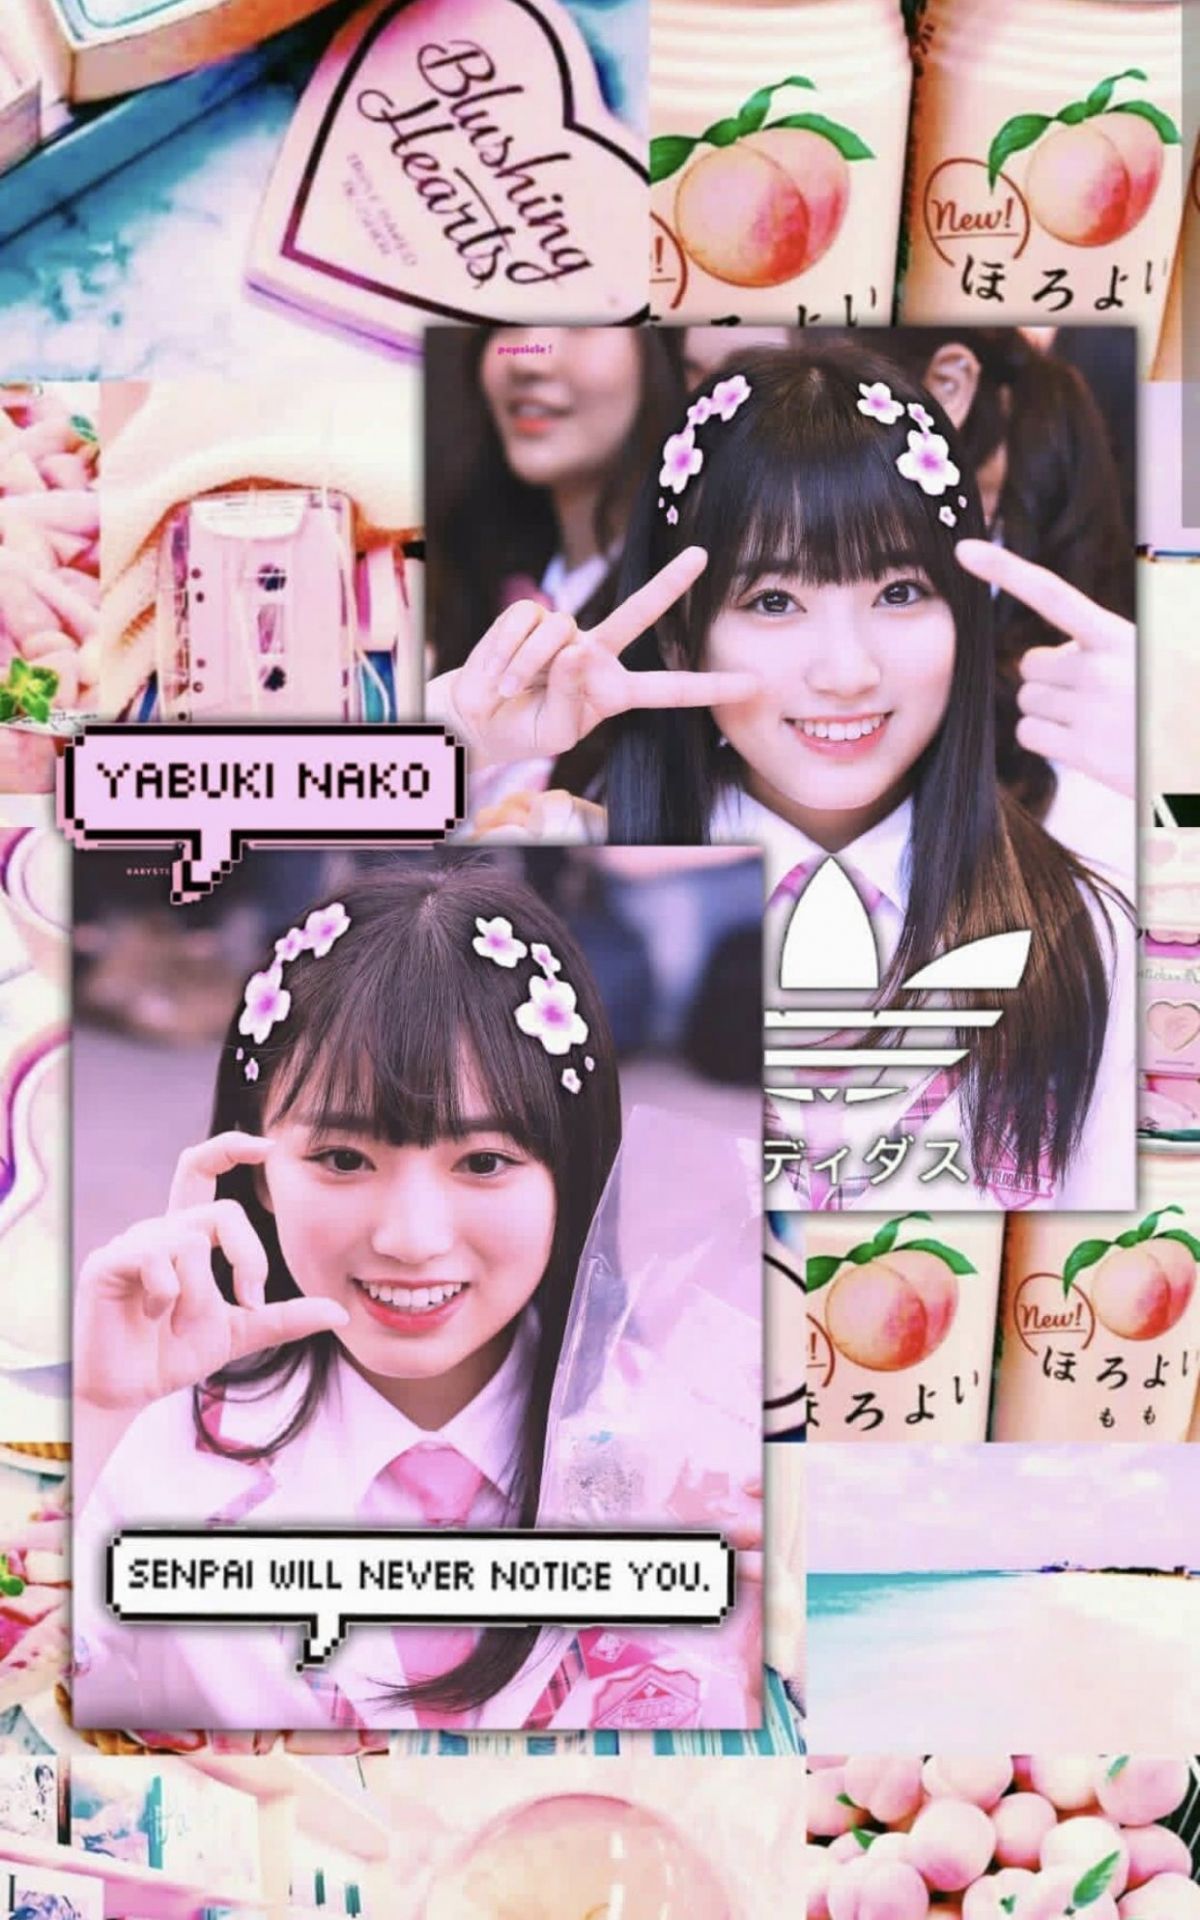 Free download Yabuki nako Izone in 2019 Wallpaper Kpop Lock screen wallpaper [1242x2208] for your Desktop, Mobile & Tablet. Explore Yabuki Nako Wallpaper. Nako Yabuki Wallpaper, Yabuki Nako Wallpaper